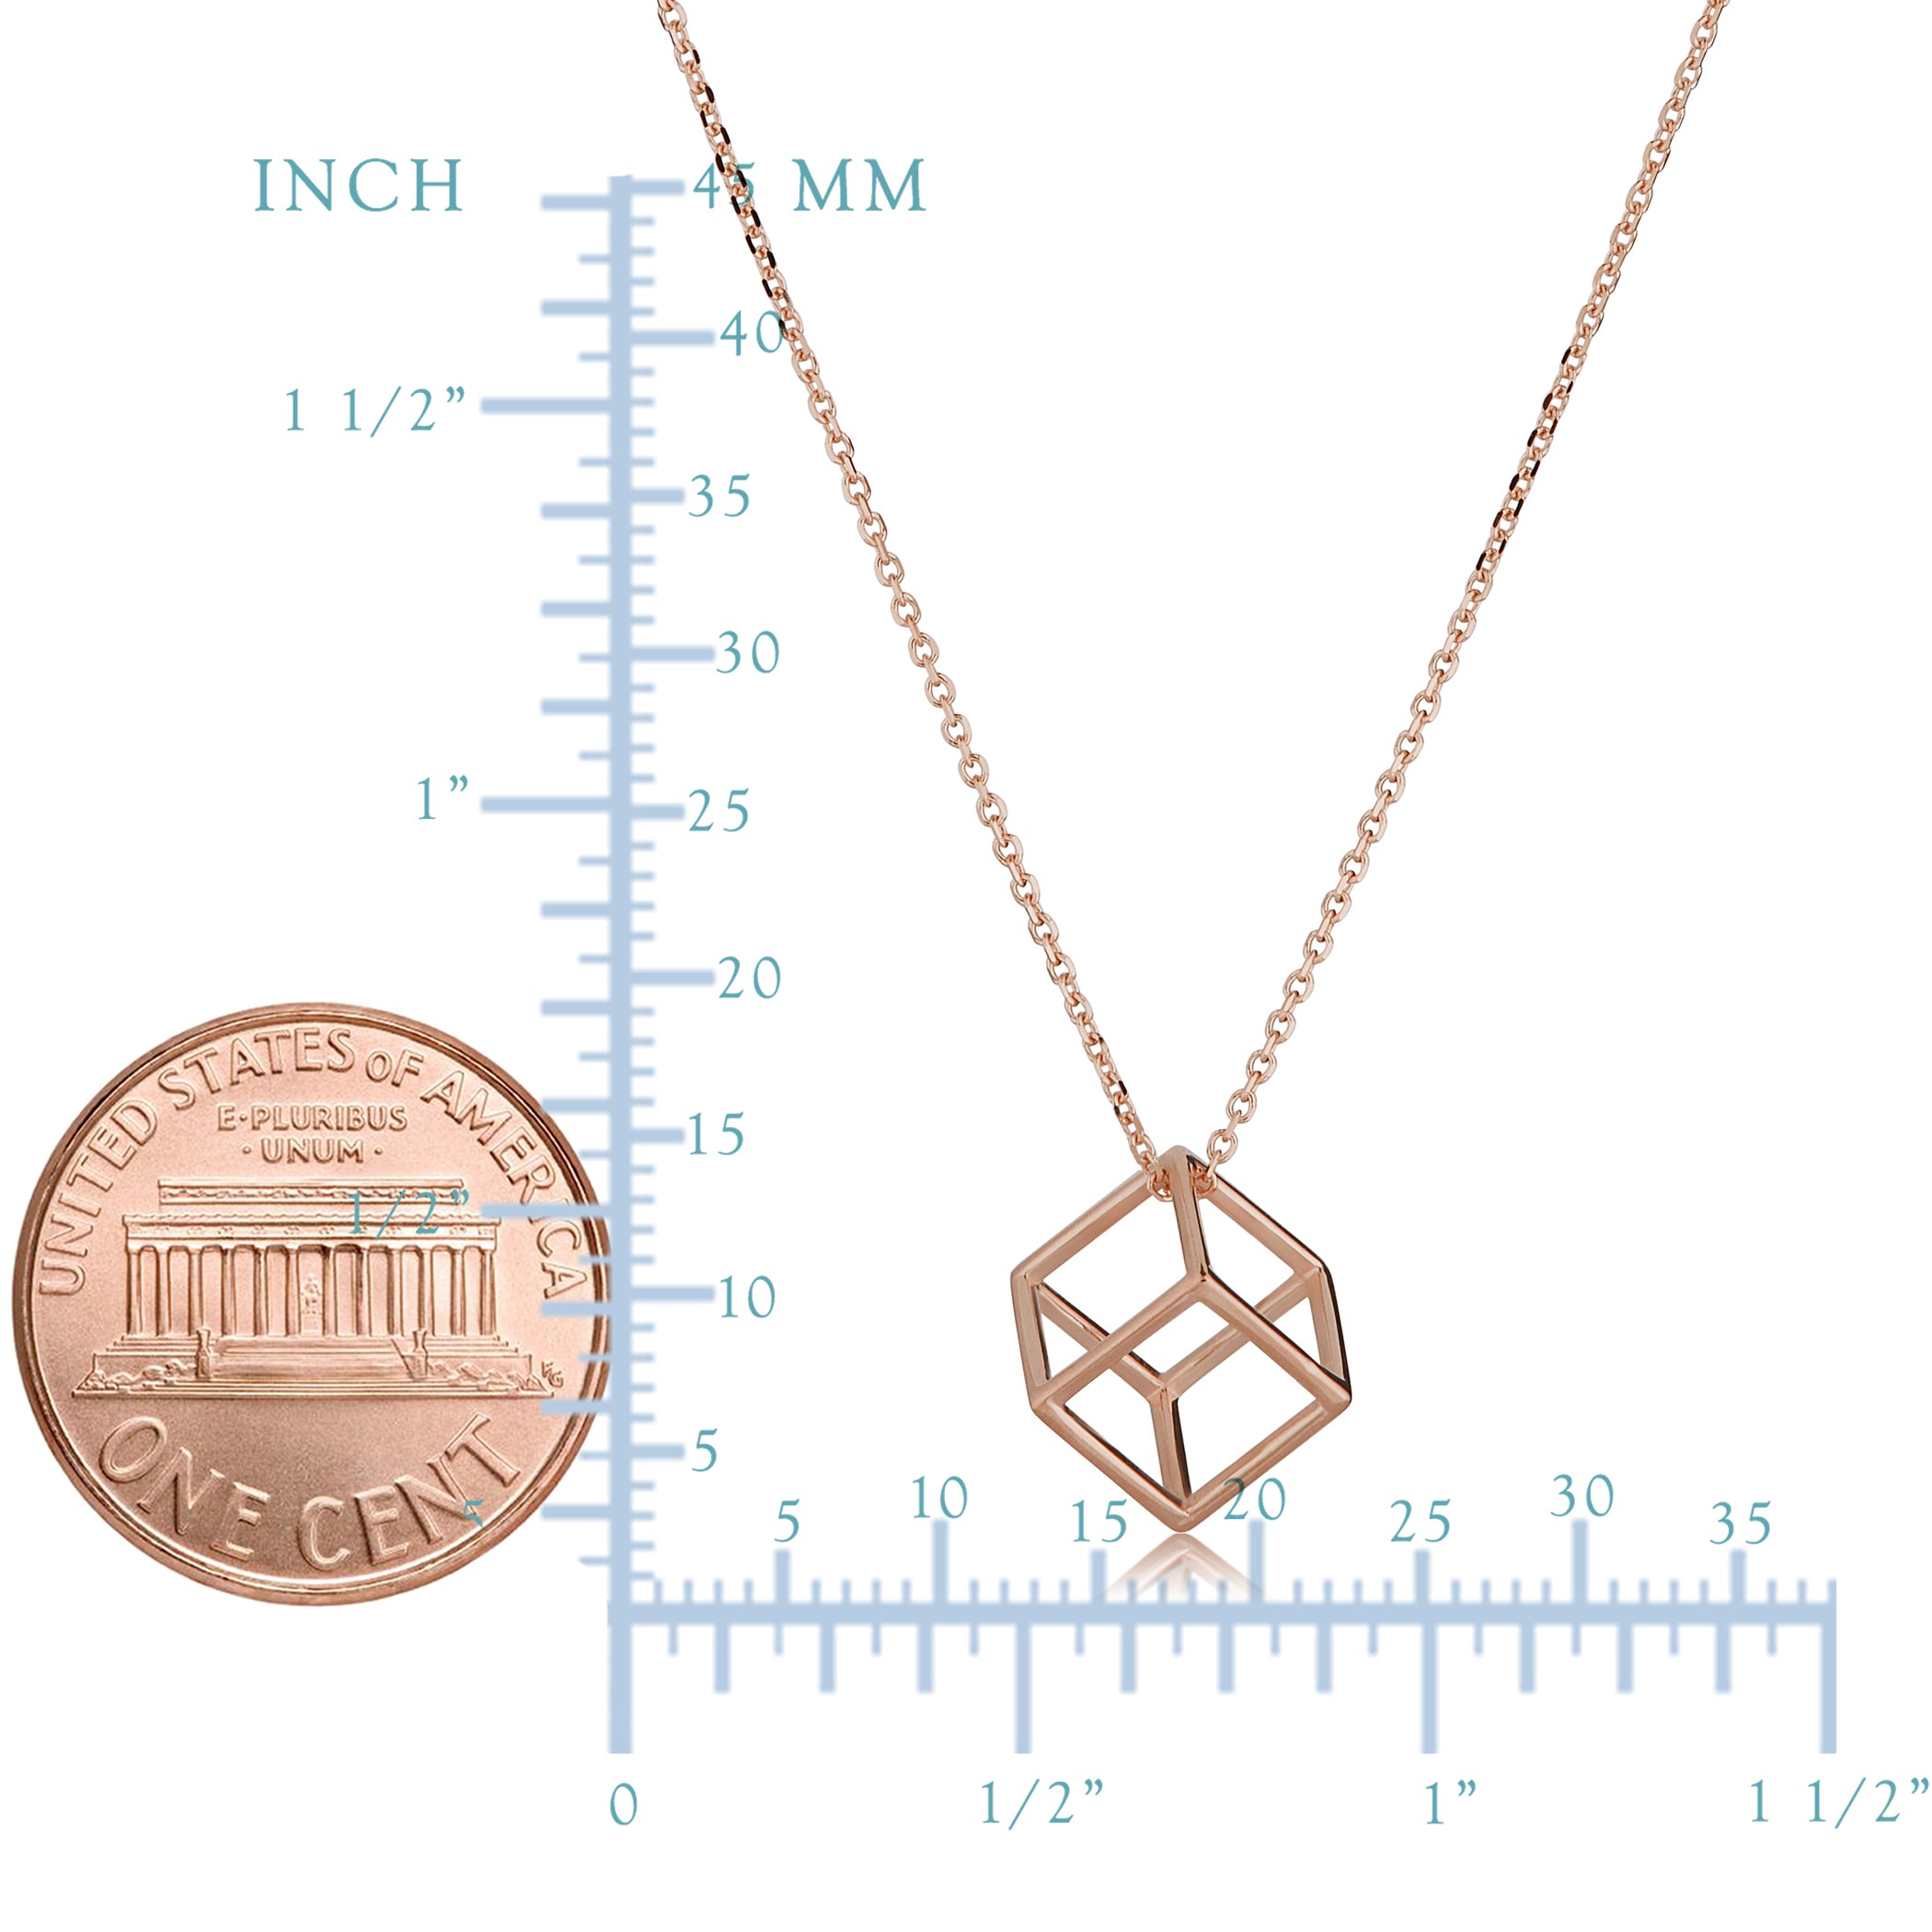 14k Rose Gold 3D Cube Pendant Adjustable Necklace, 18"